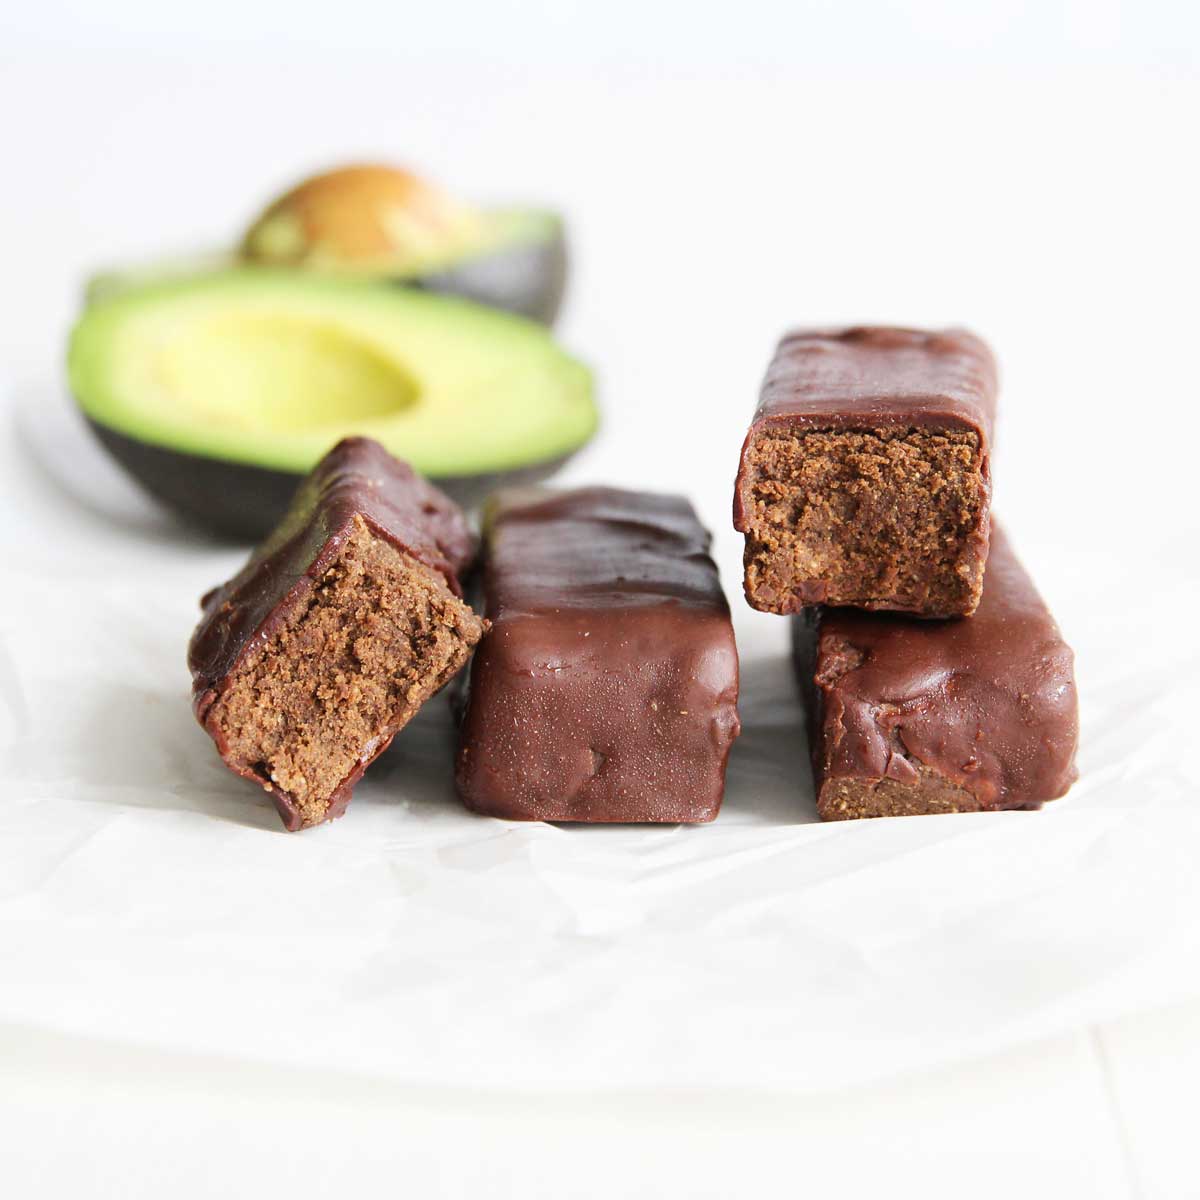 Easy Chocolate Avocado Protein Bars (Healthy, Vegan & Low Carb Recipe!) - Almond Joy Protein Bars